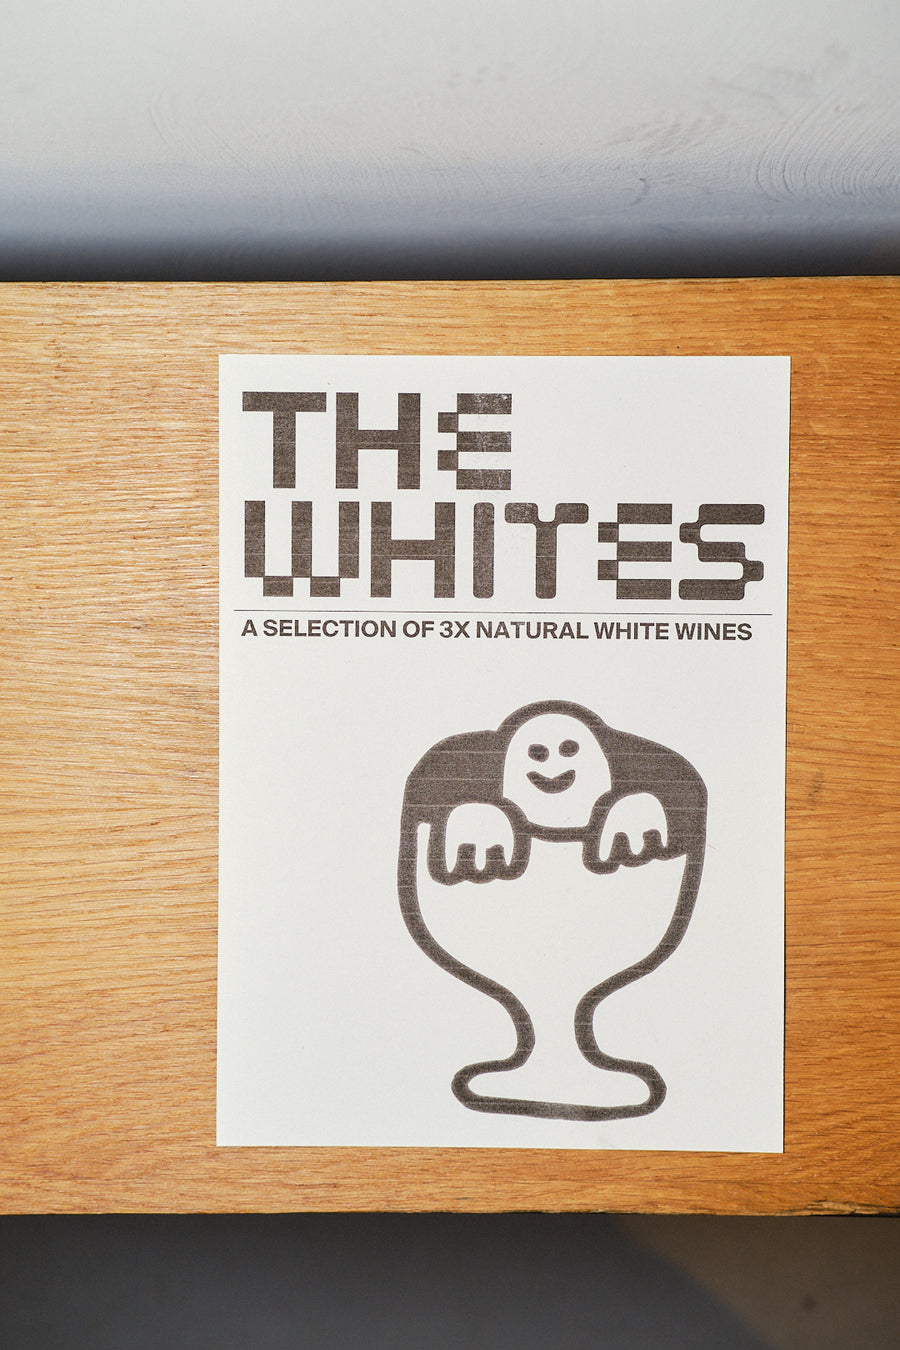 Christmas Gift Box - The Whites